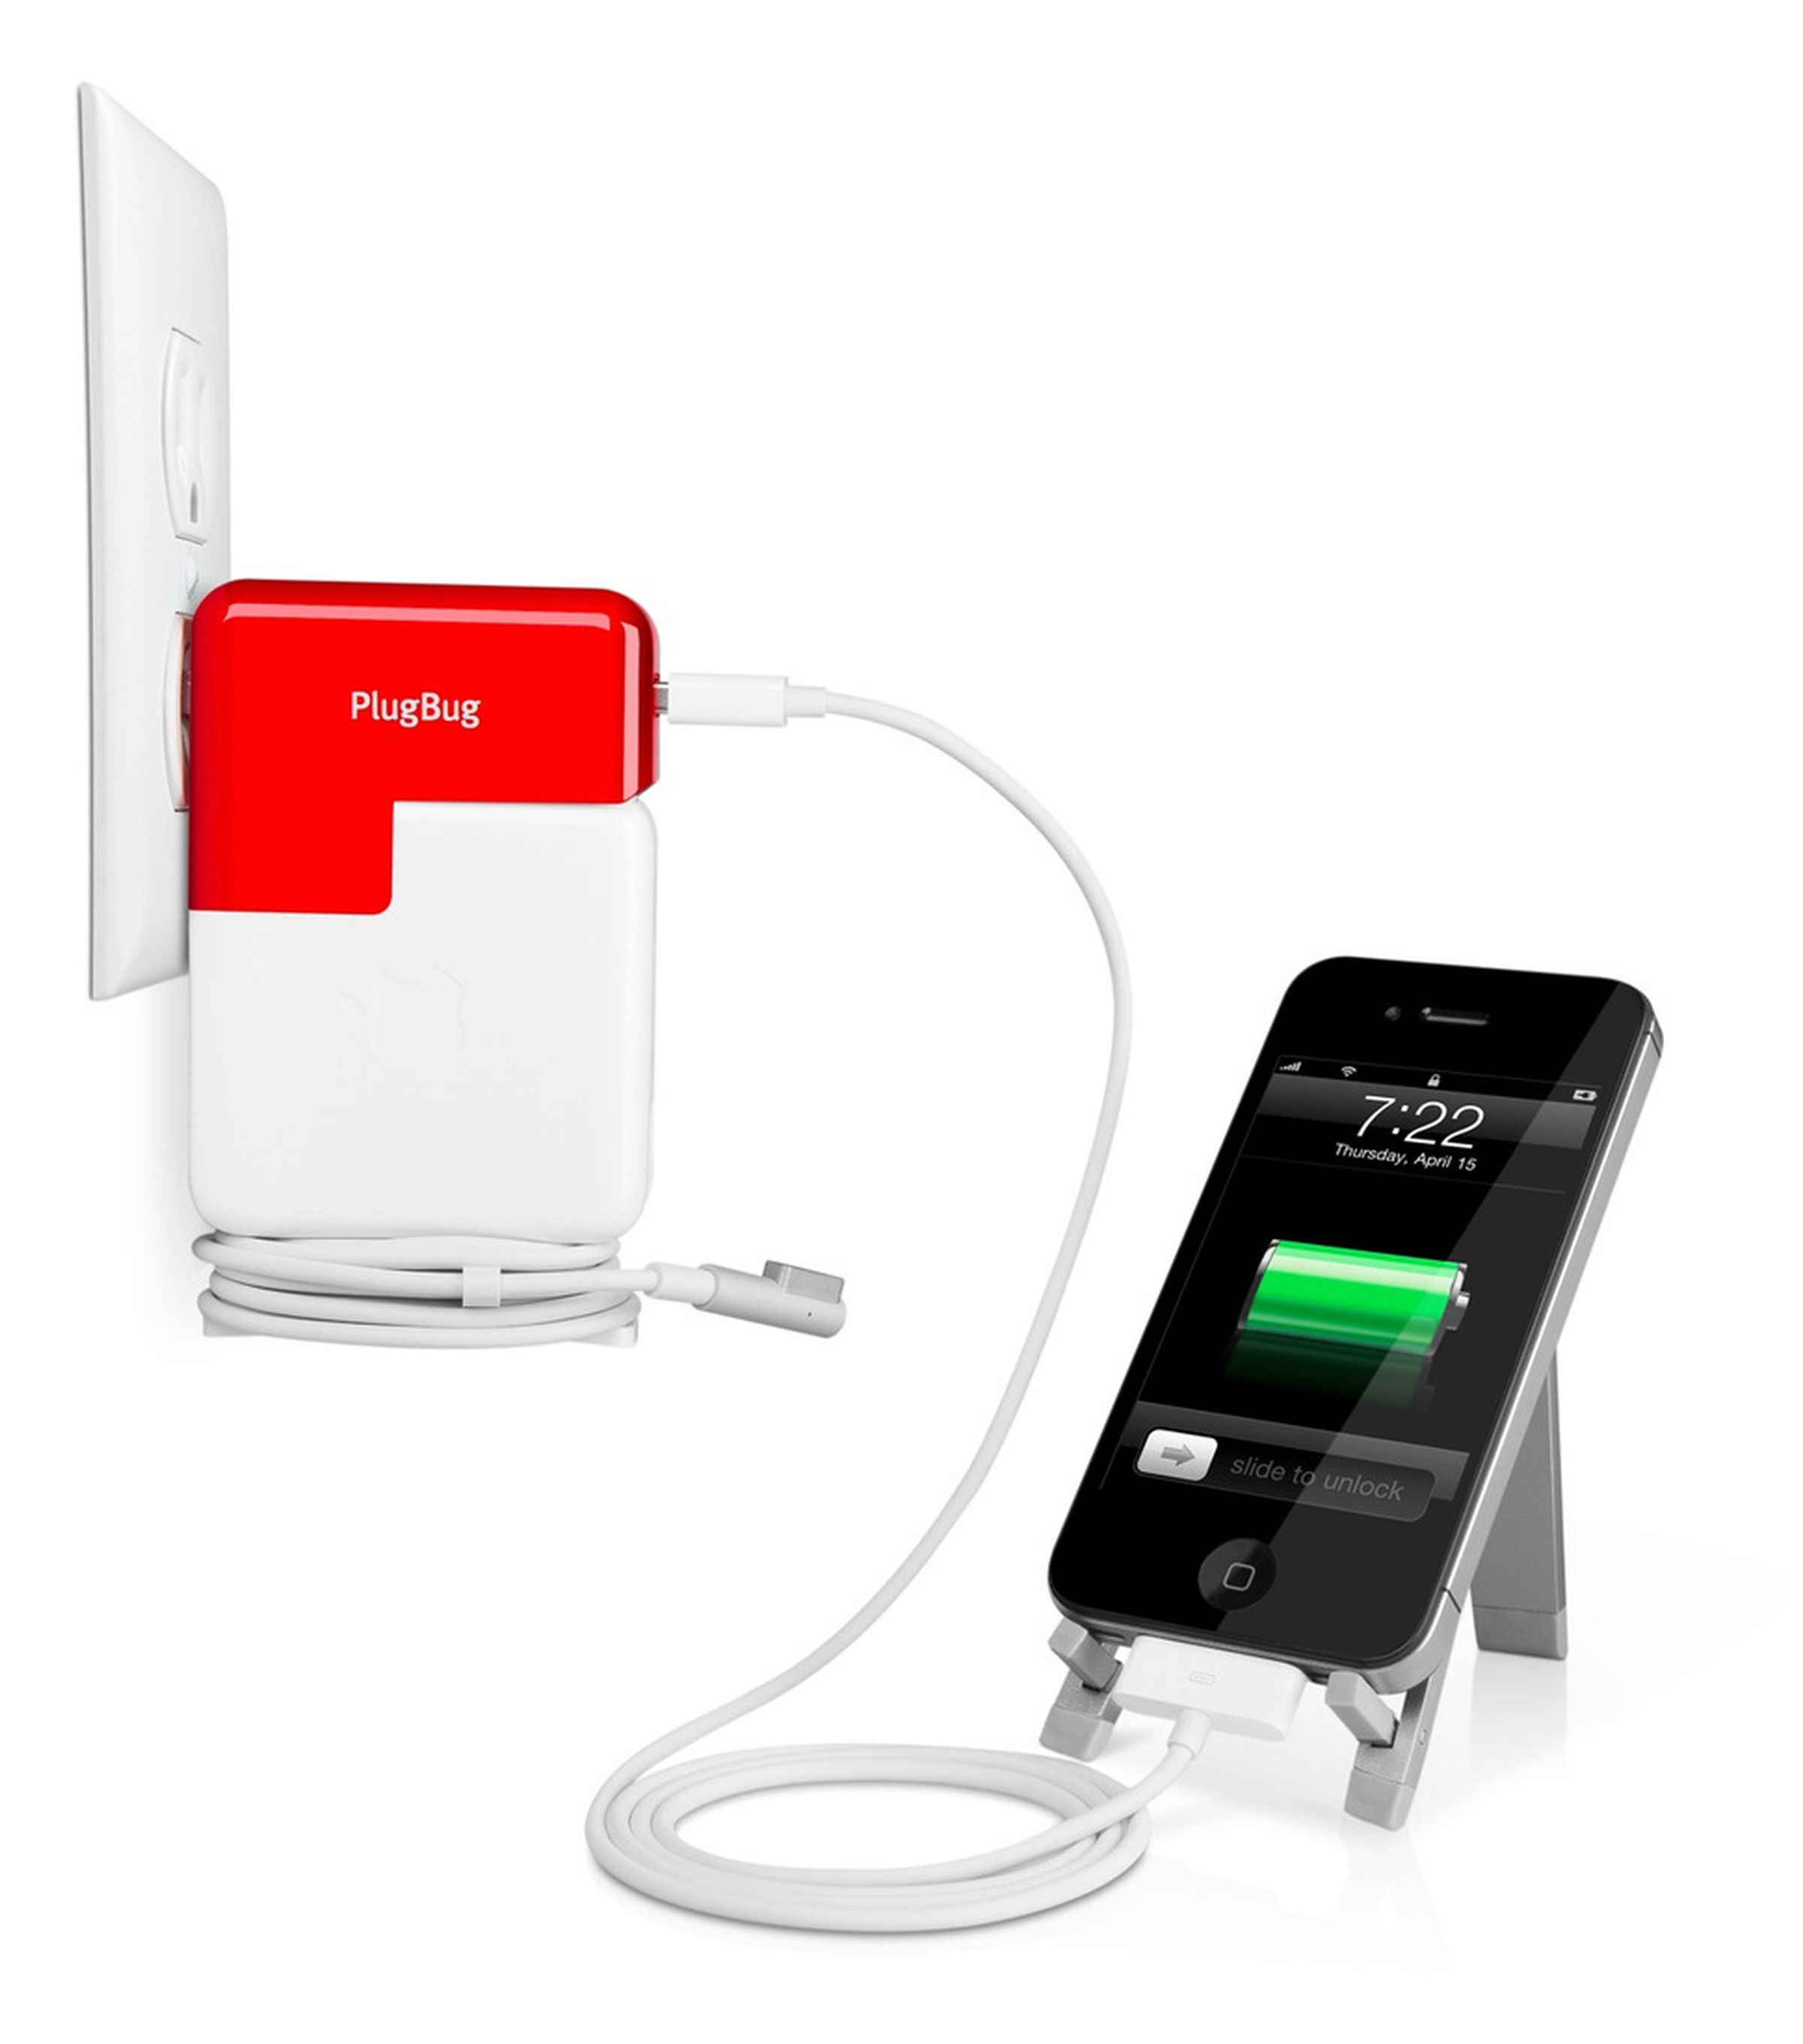 PlugBug iPad and iPhone charger